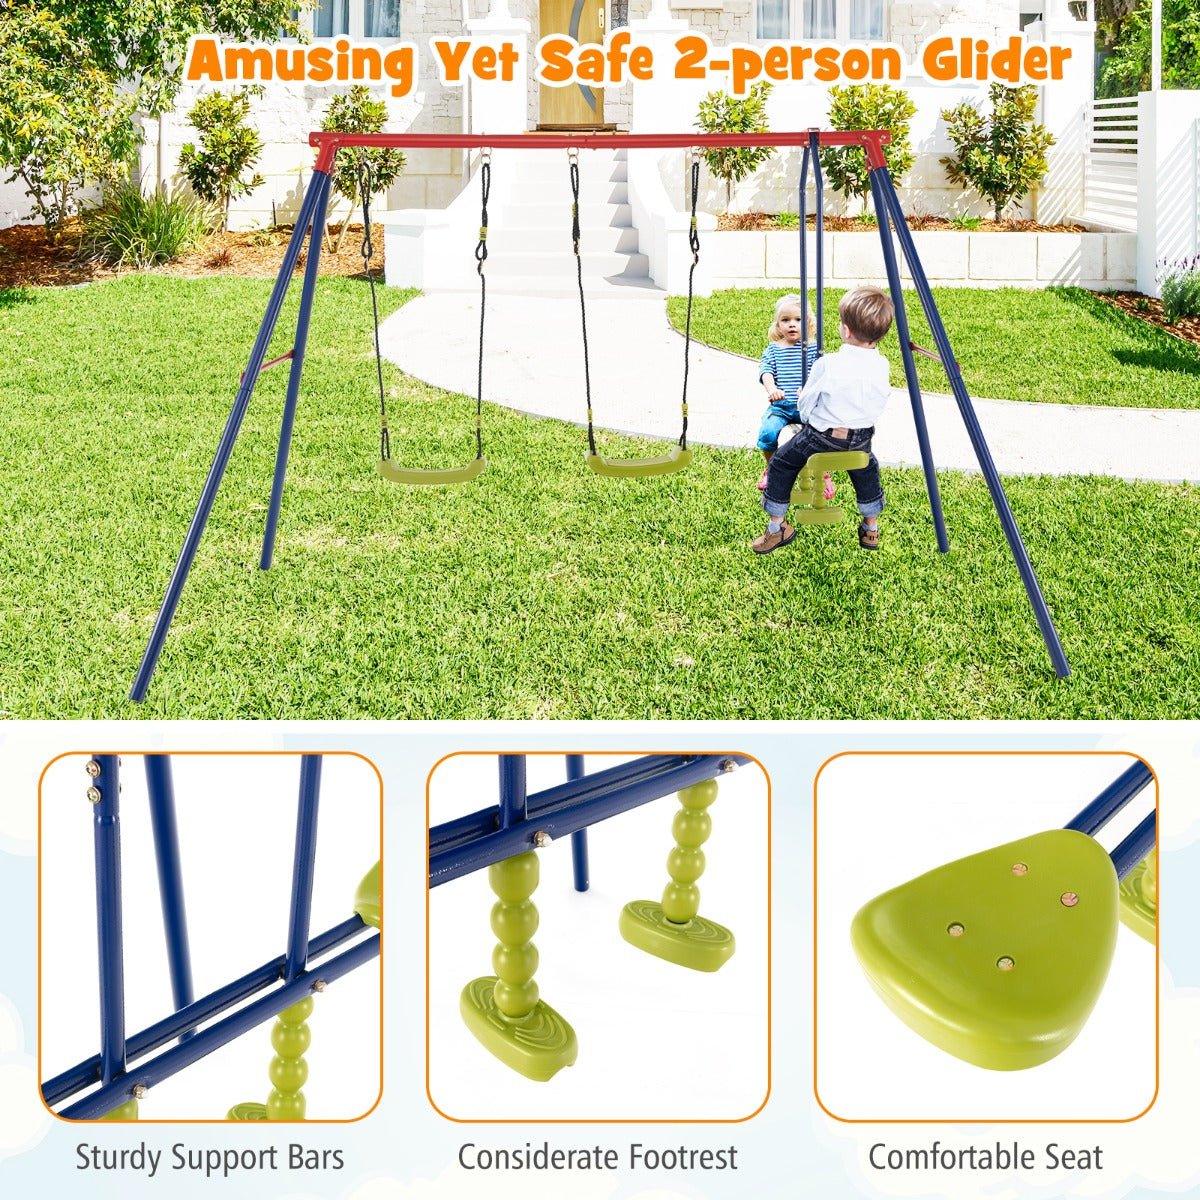 2-in-1 Swing Set: Height-Adjustable Design for Growing Kids